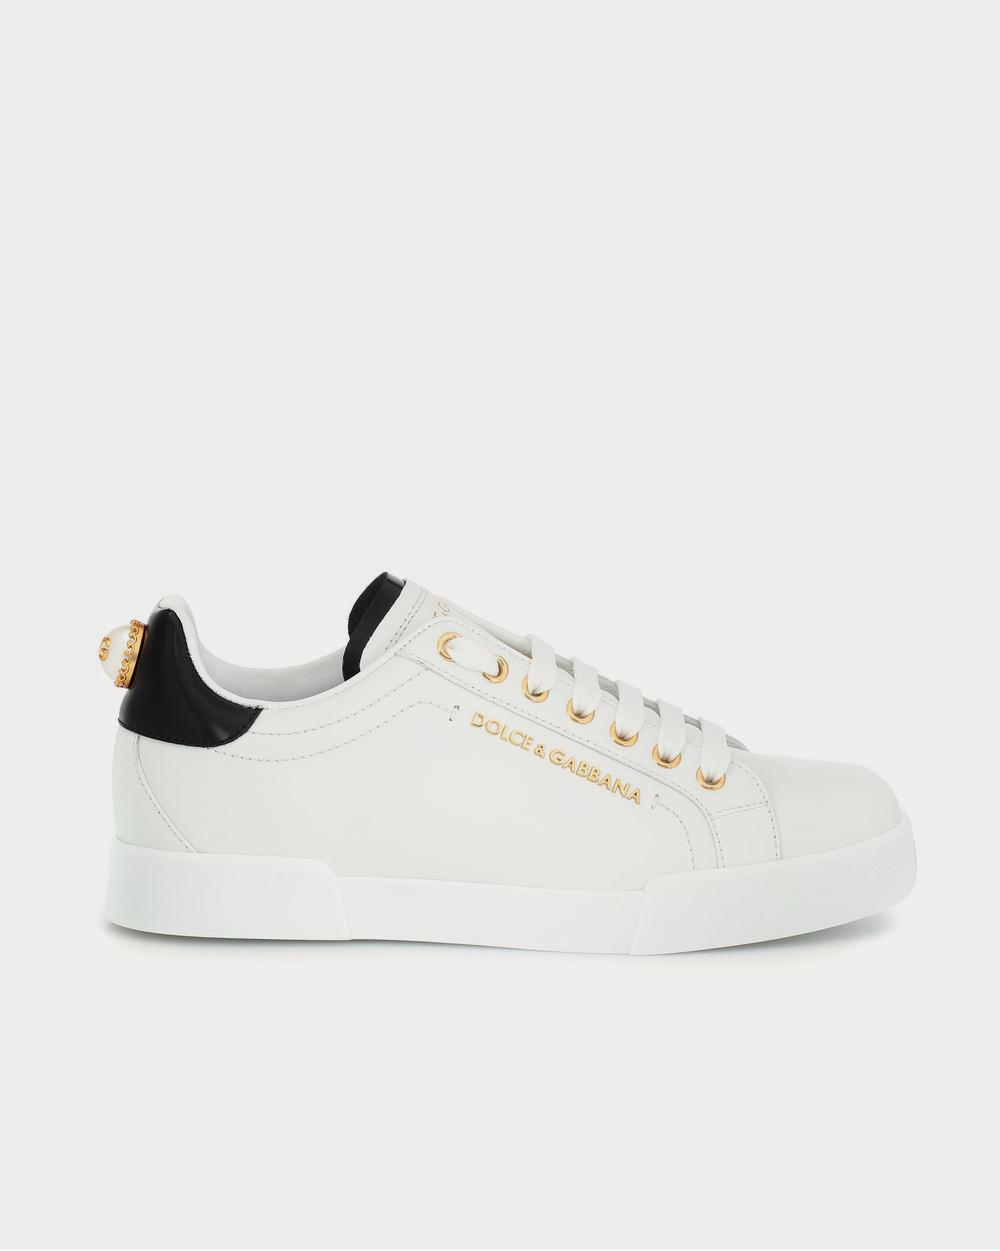 Dolce & Gabbana - Portofino leather white gold Low Top Sneakers